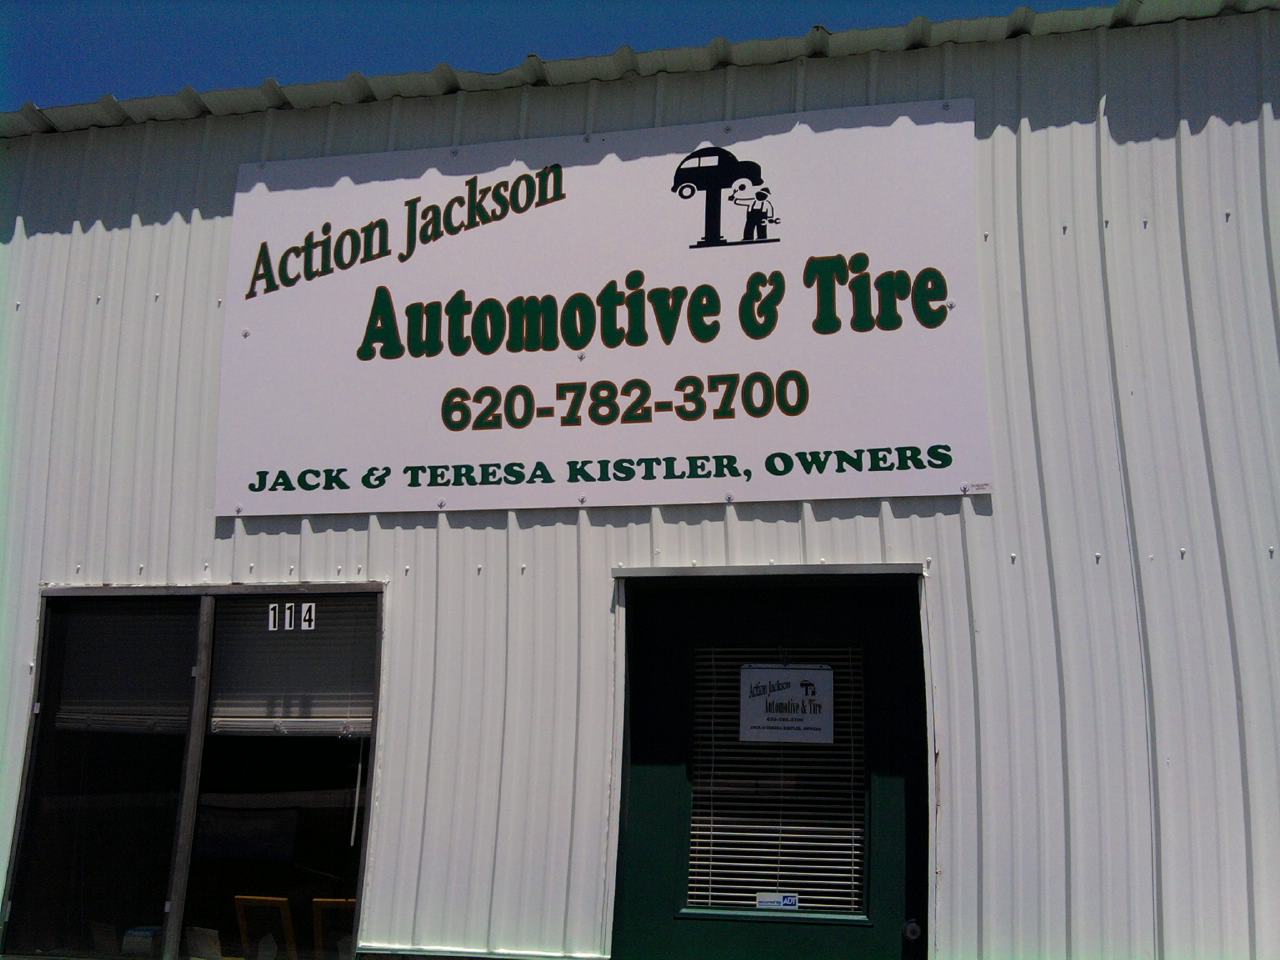 Action Jackson Automotive